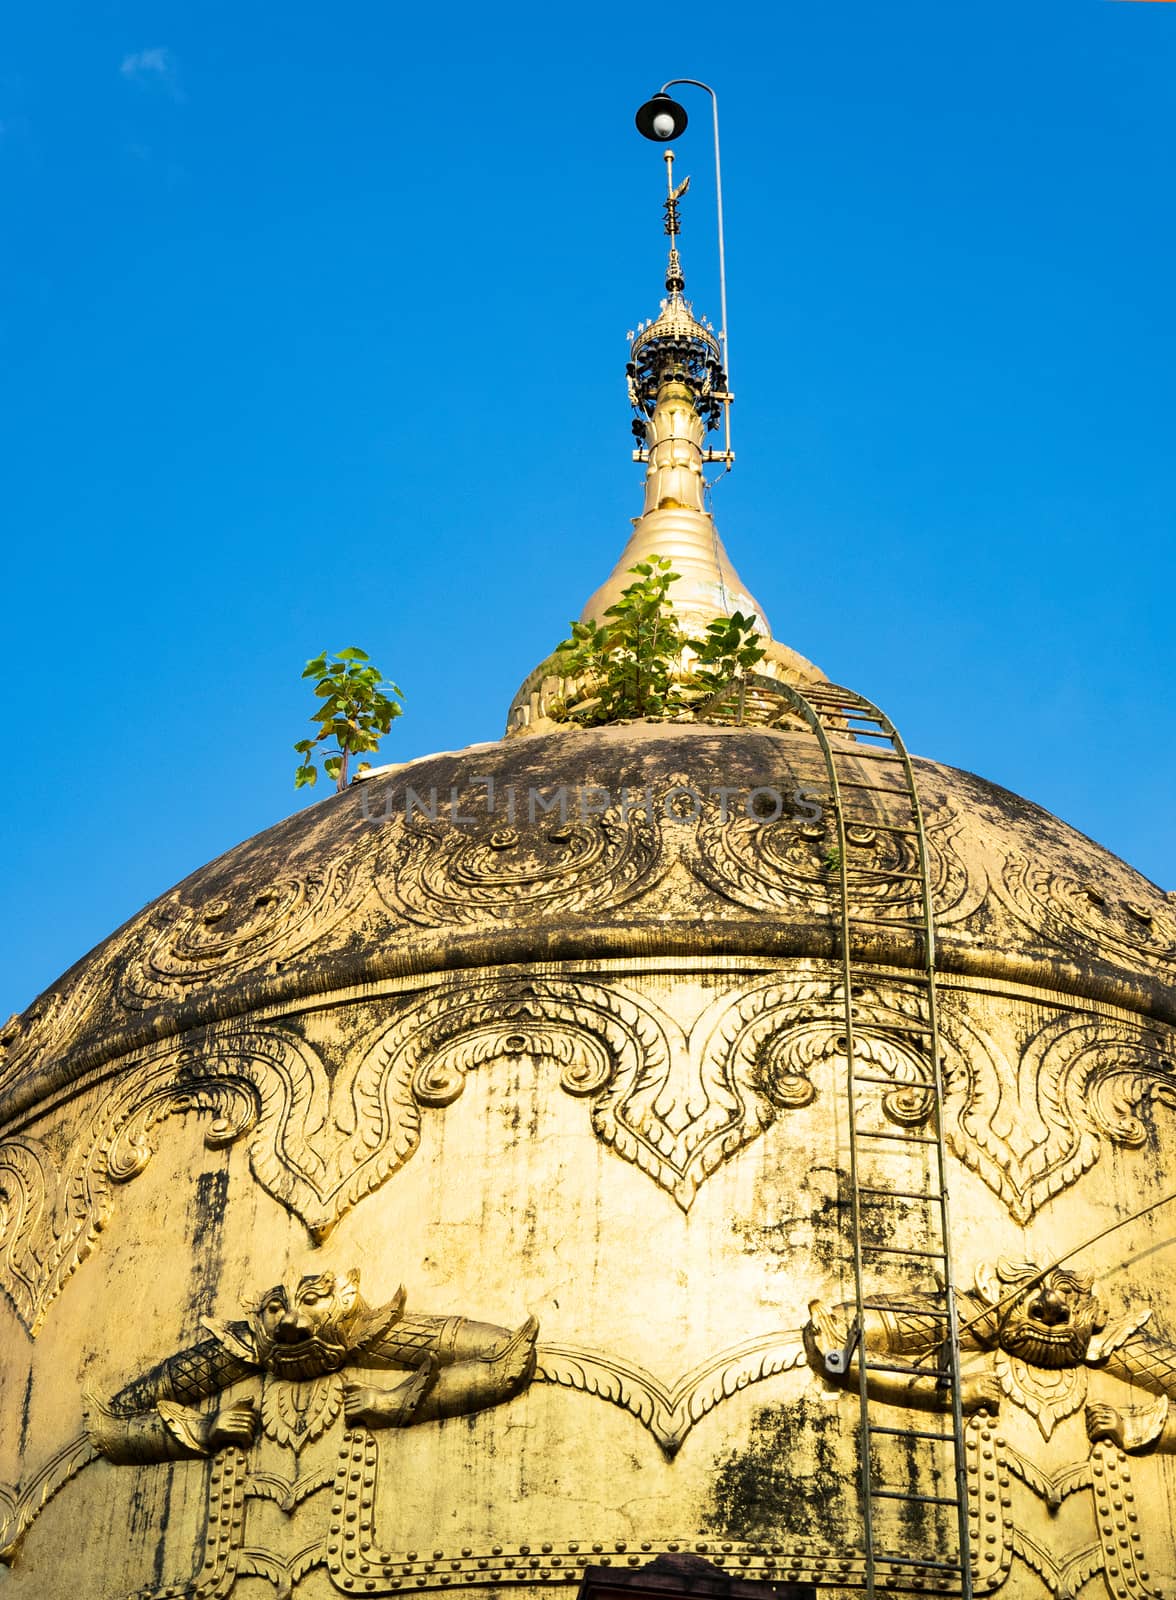 Detail of old pagoda at the Moe Hnying Monastery in Yangon, Myanmar. 